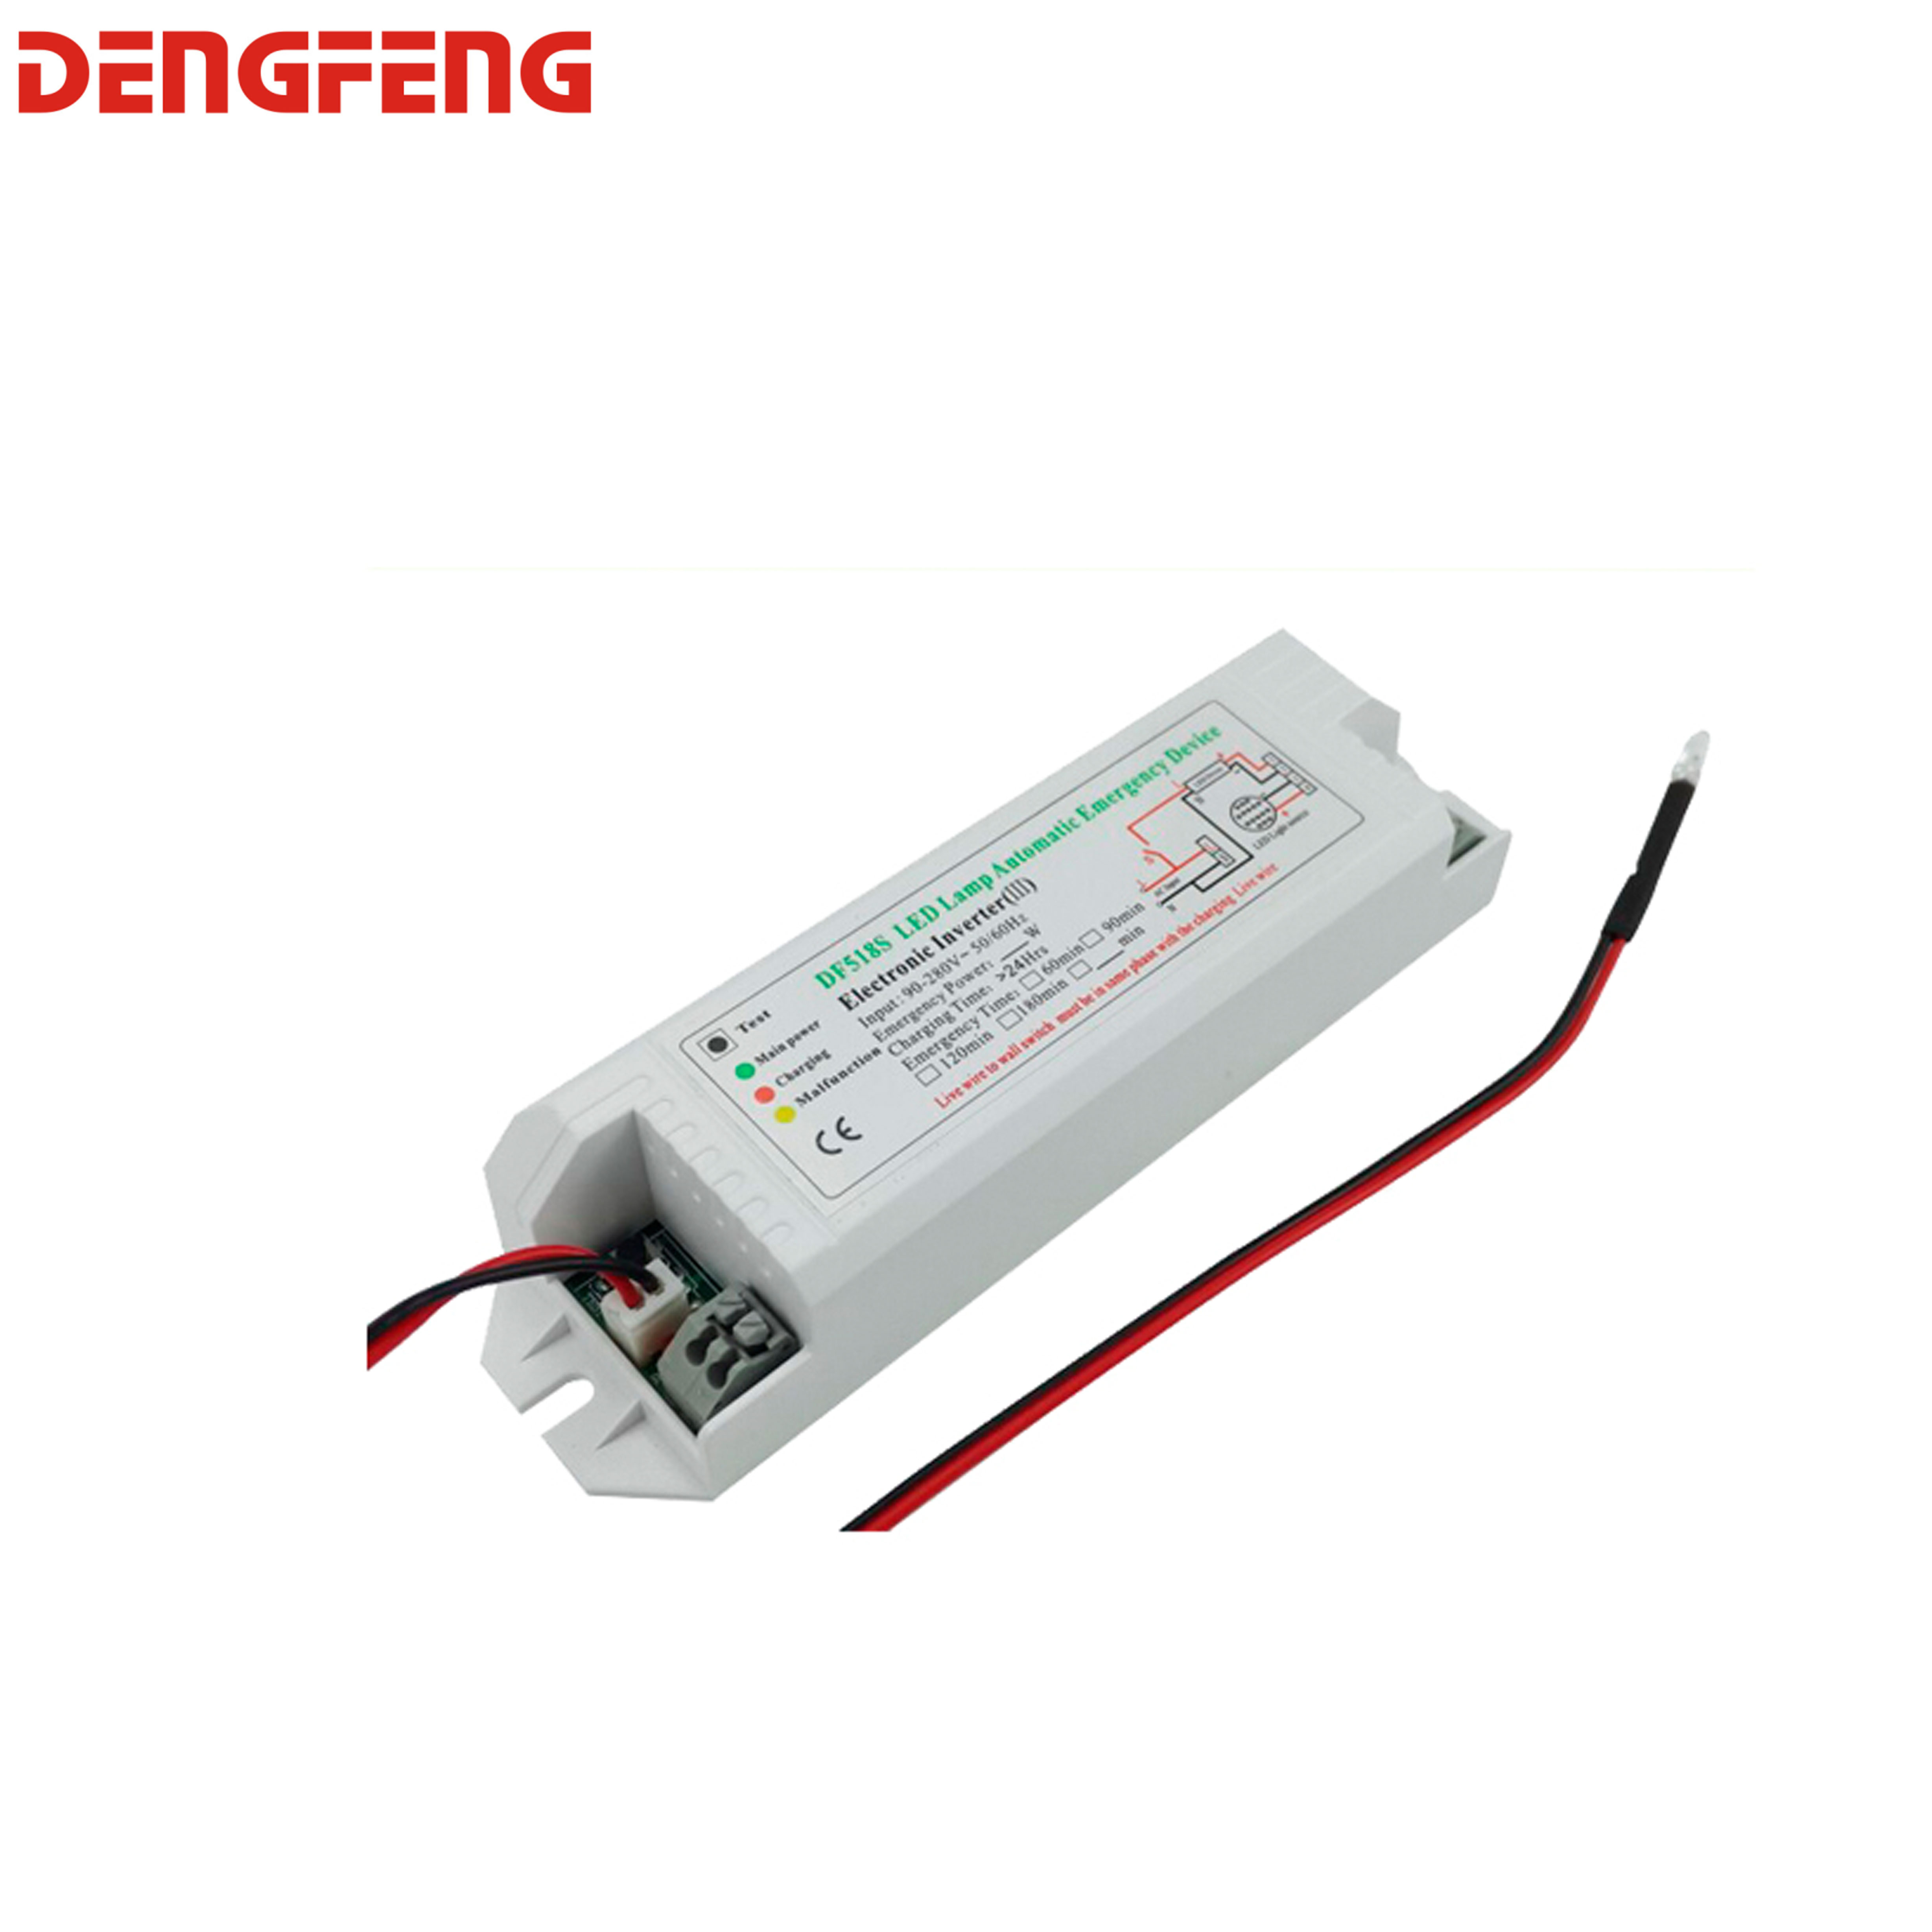 SAA certification LED emergency battery power kit DF518S  has 1w-5w emergency power output  multi-function led kit